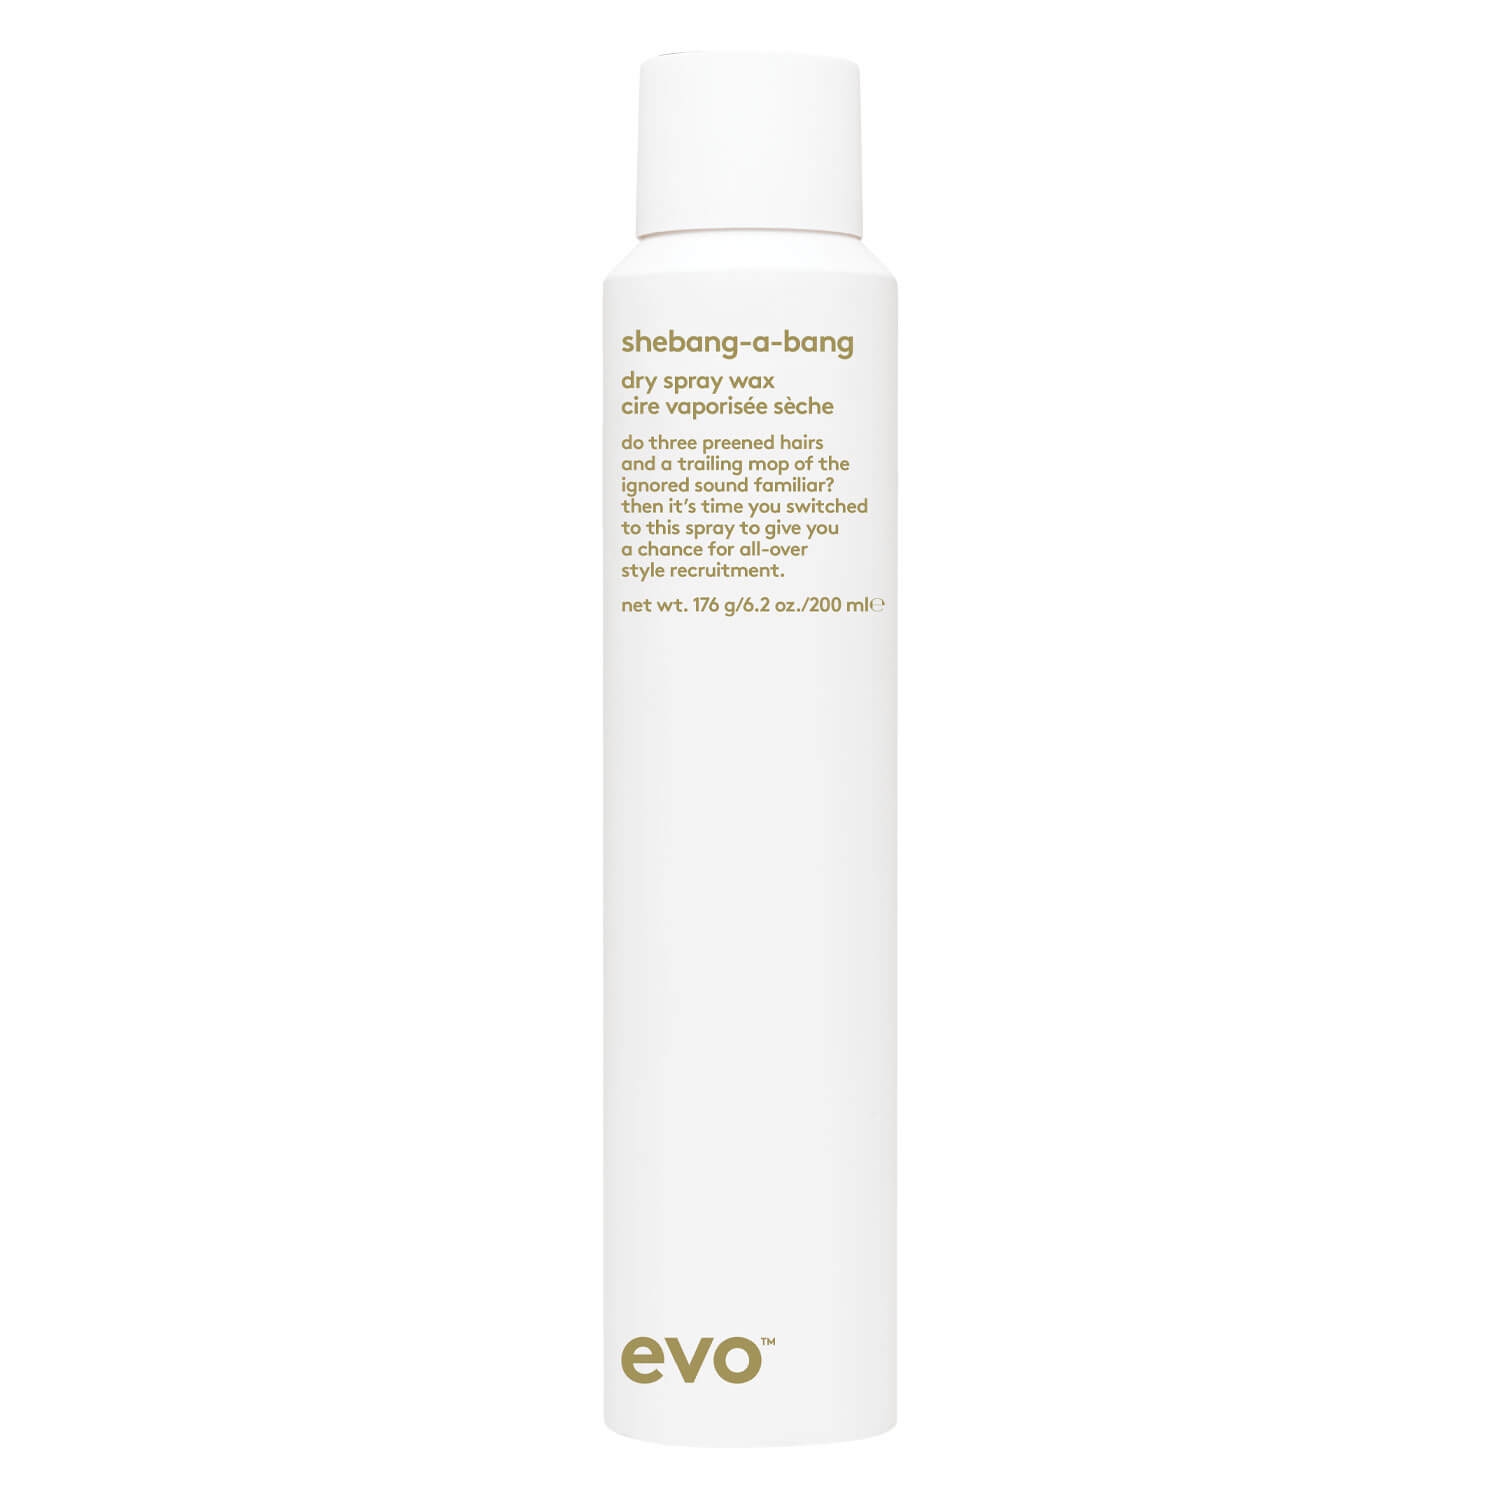 Produktbild von evo style - shebang-a-bang dry spray wax